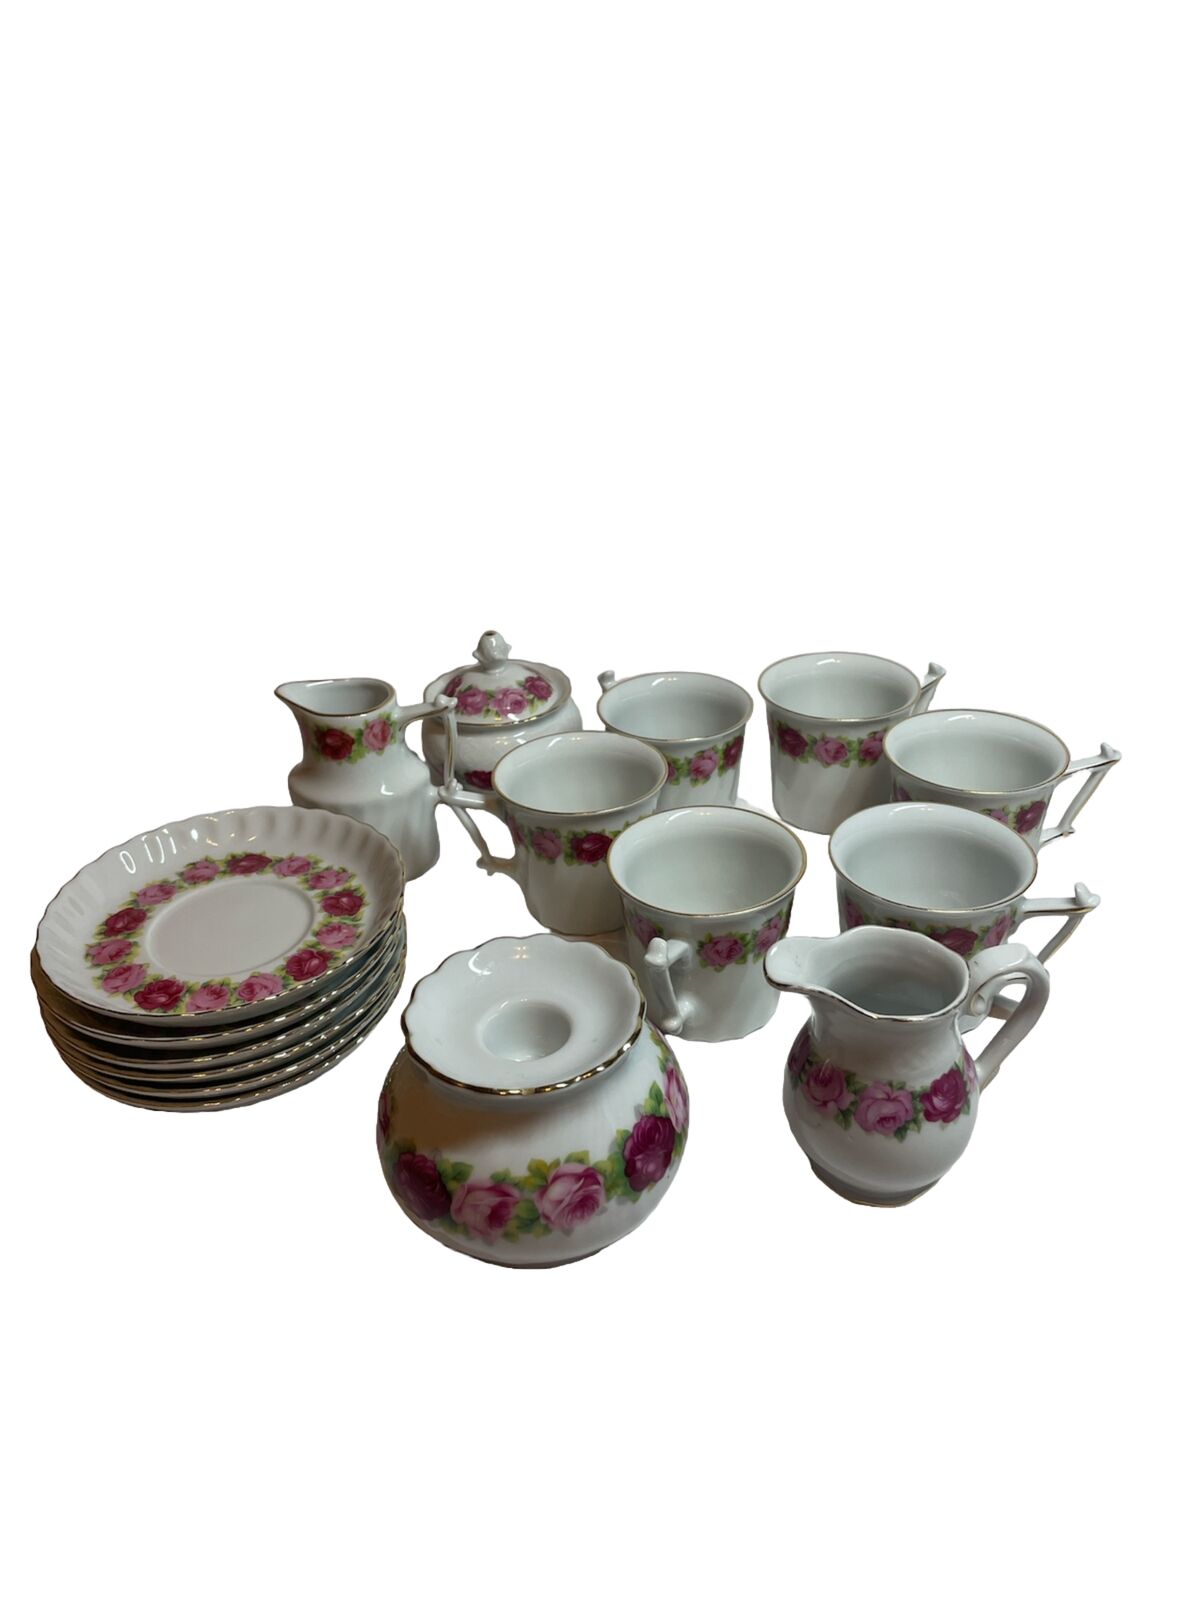 Rare Winterling Bavaria tea/coffee/demitasse set Pink Roses, ca 1950s-1970s